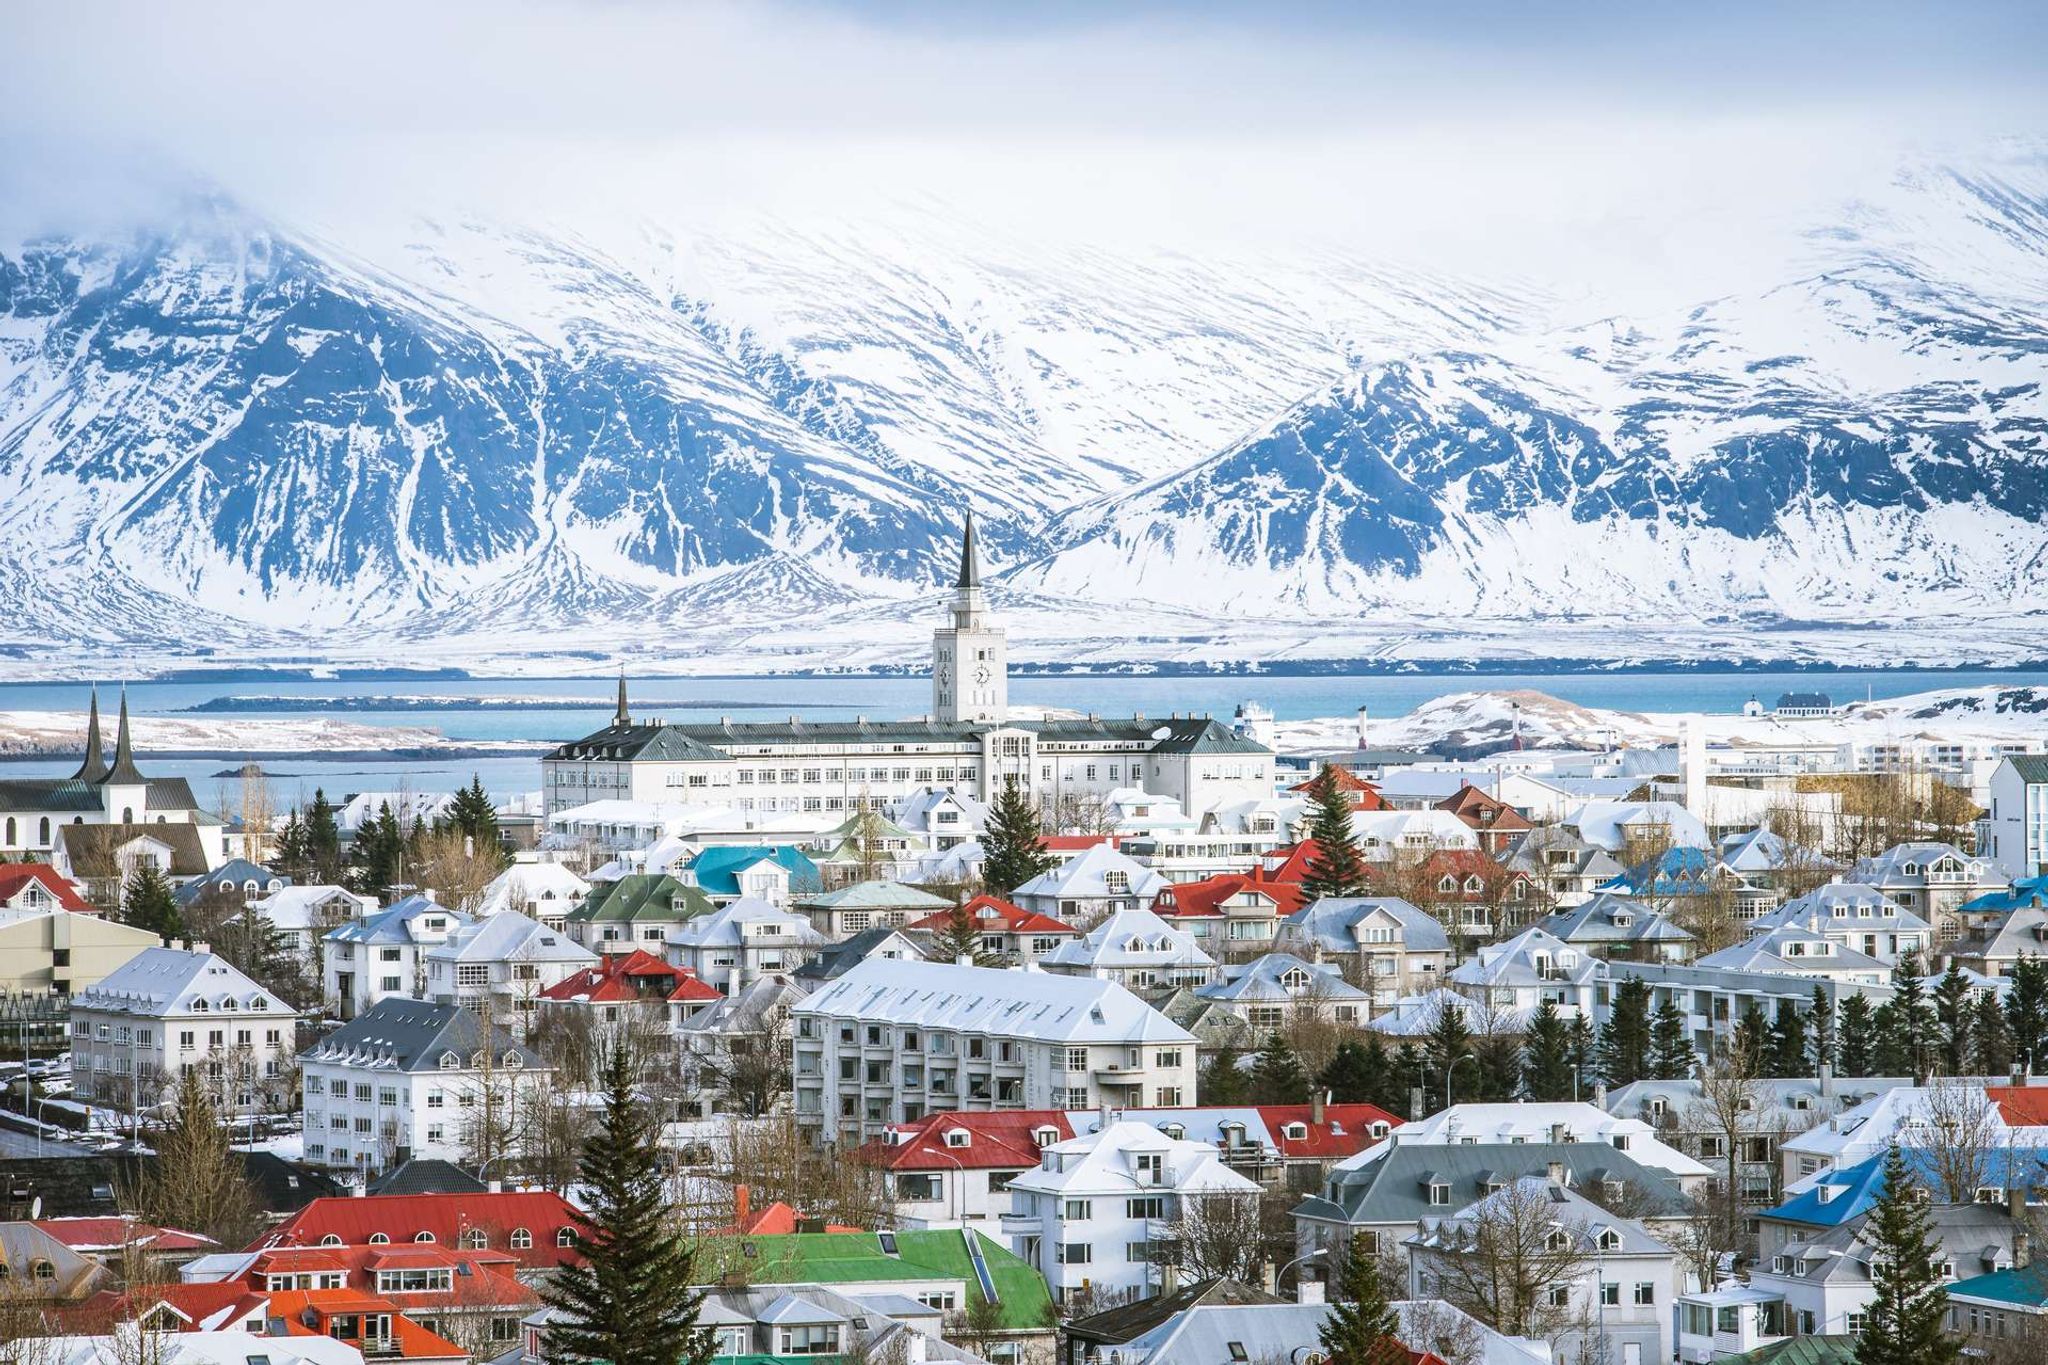 IJsland Reykjavik